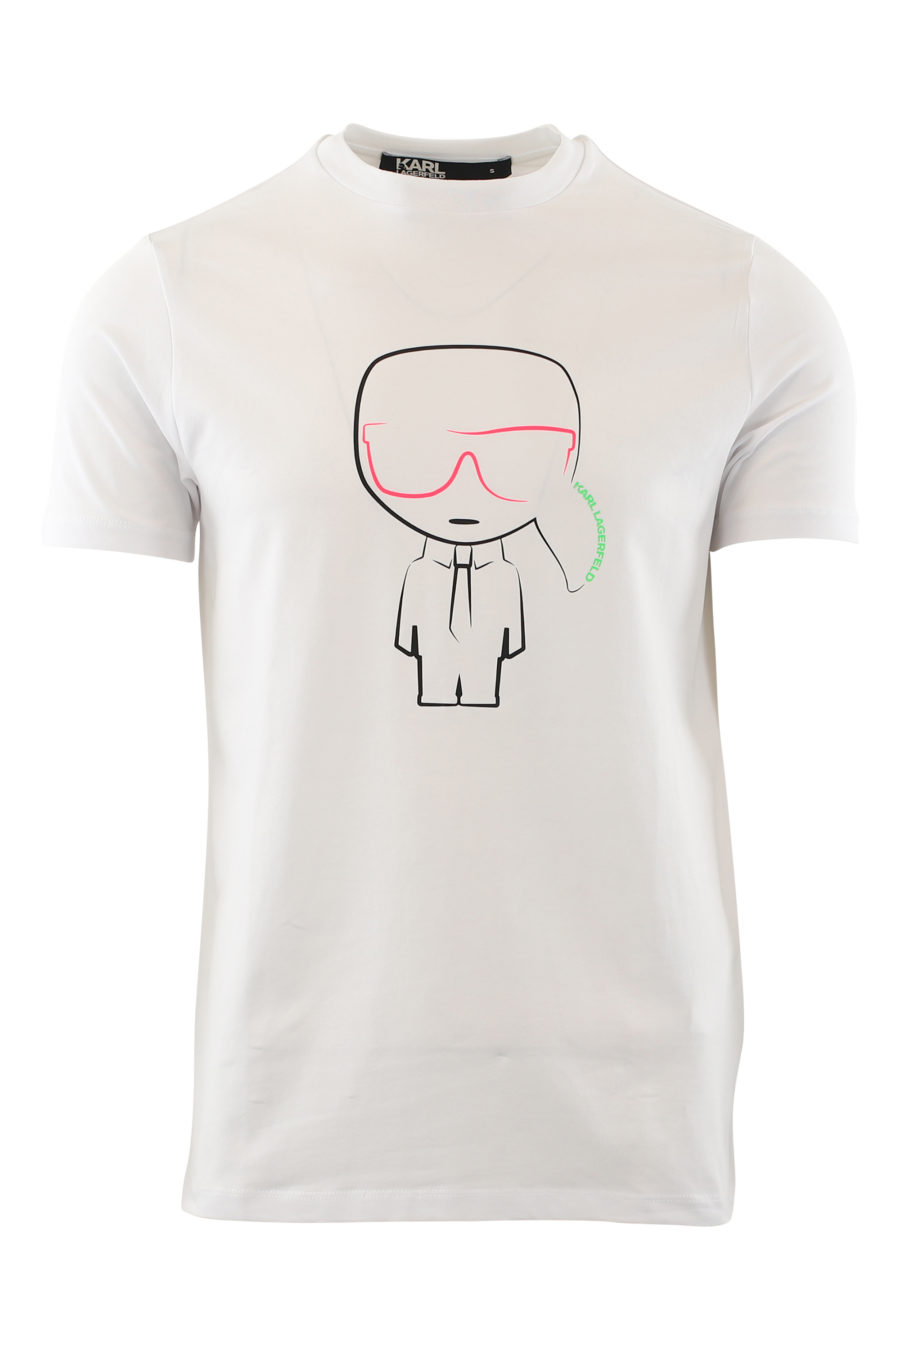 T-shirt blanc avec logo multicolore - IMG 6522